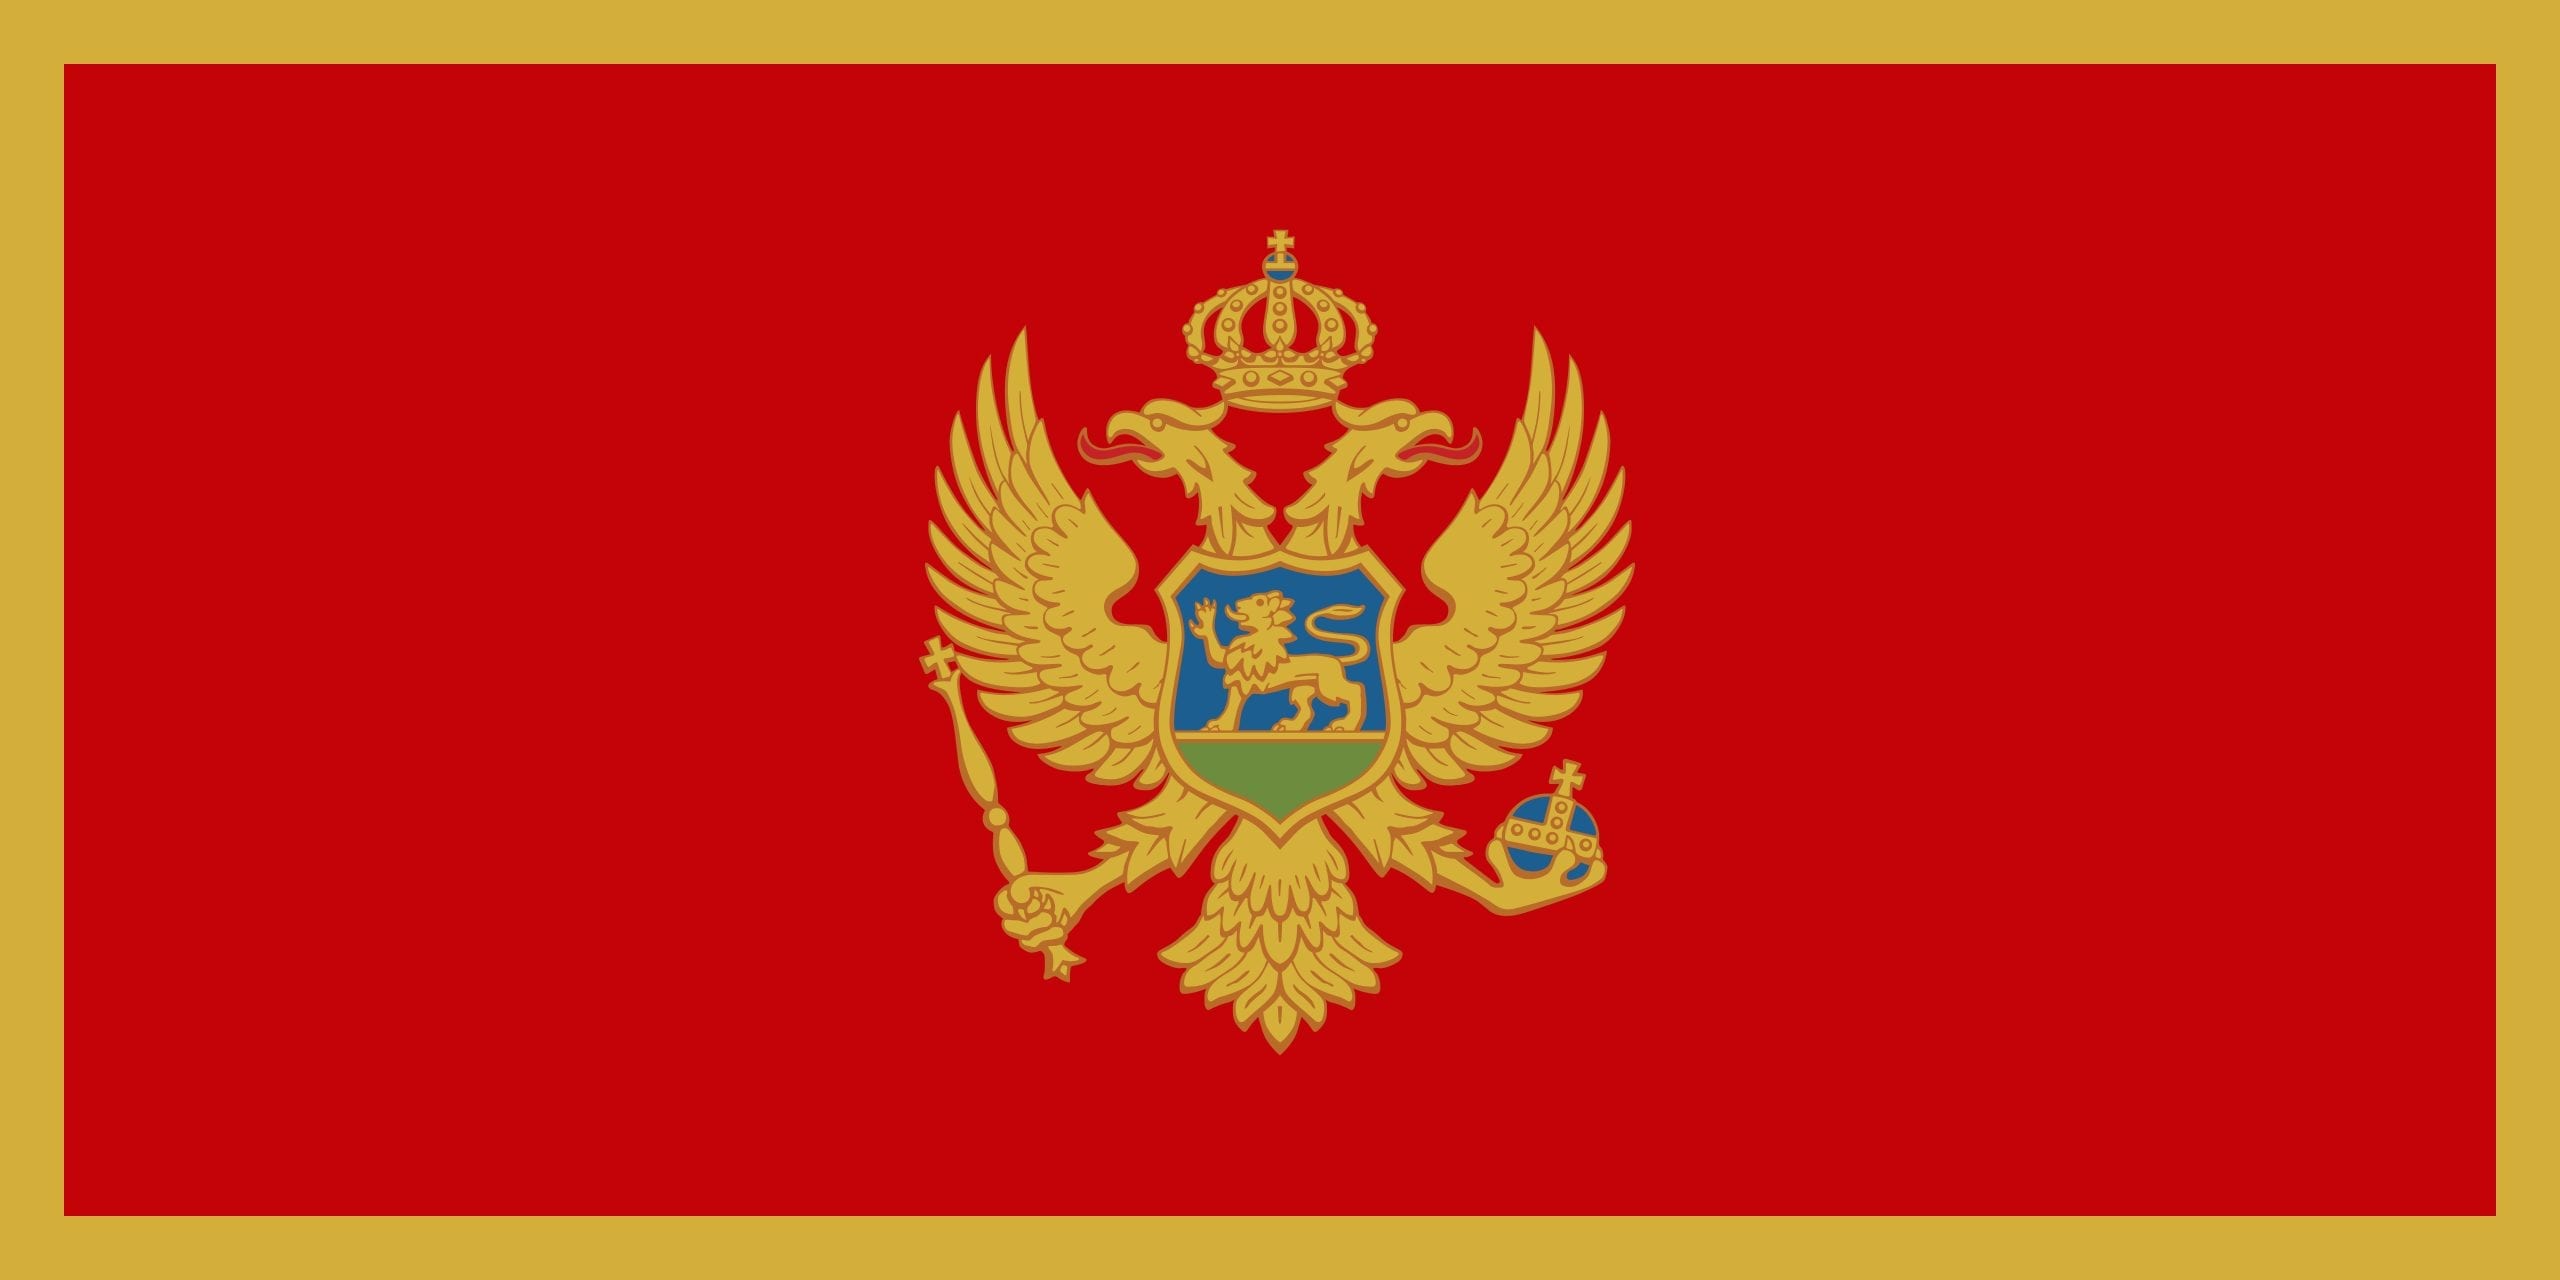 Facts of Montenegro